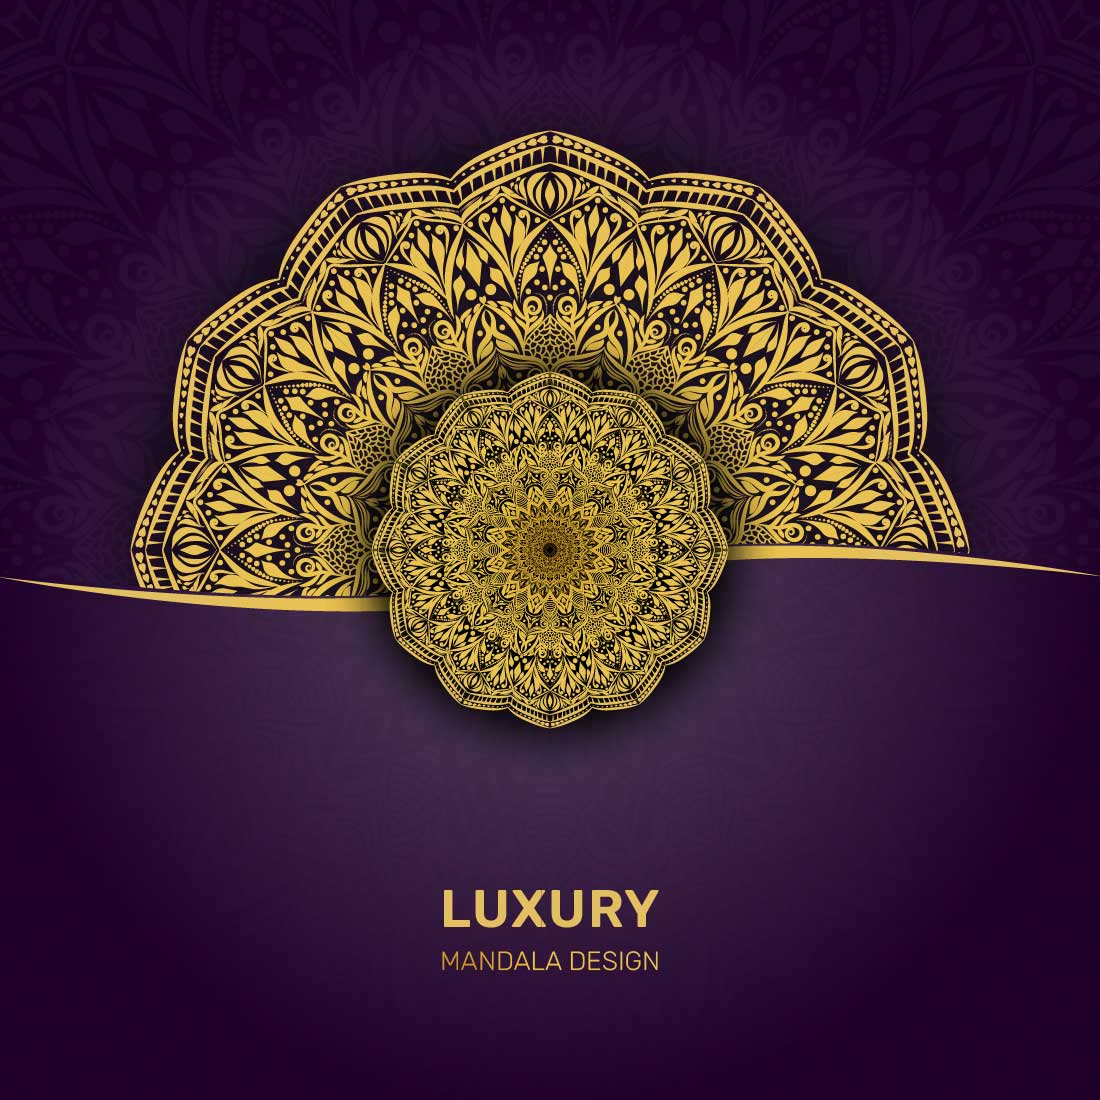 Luxury Mandala design preview image.